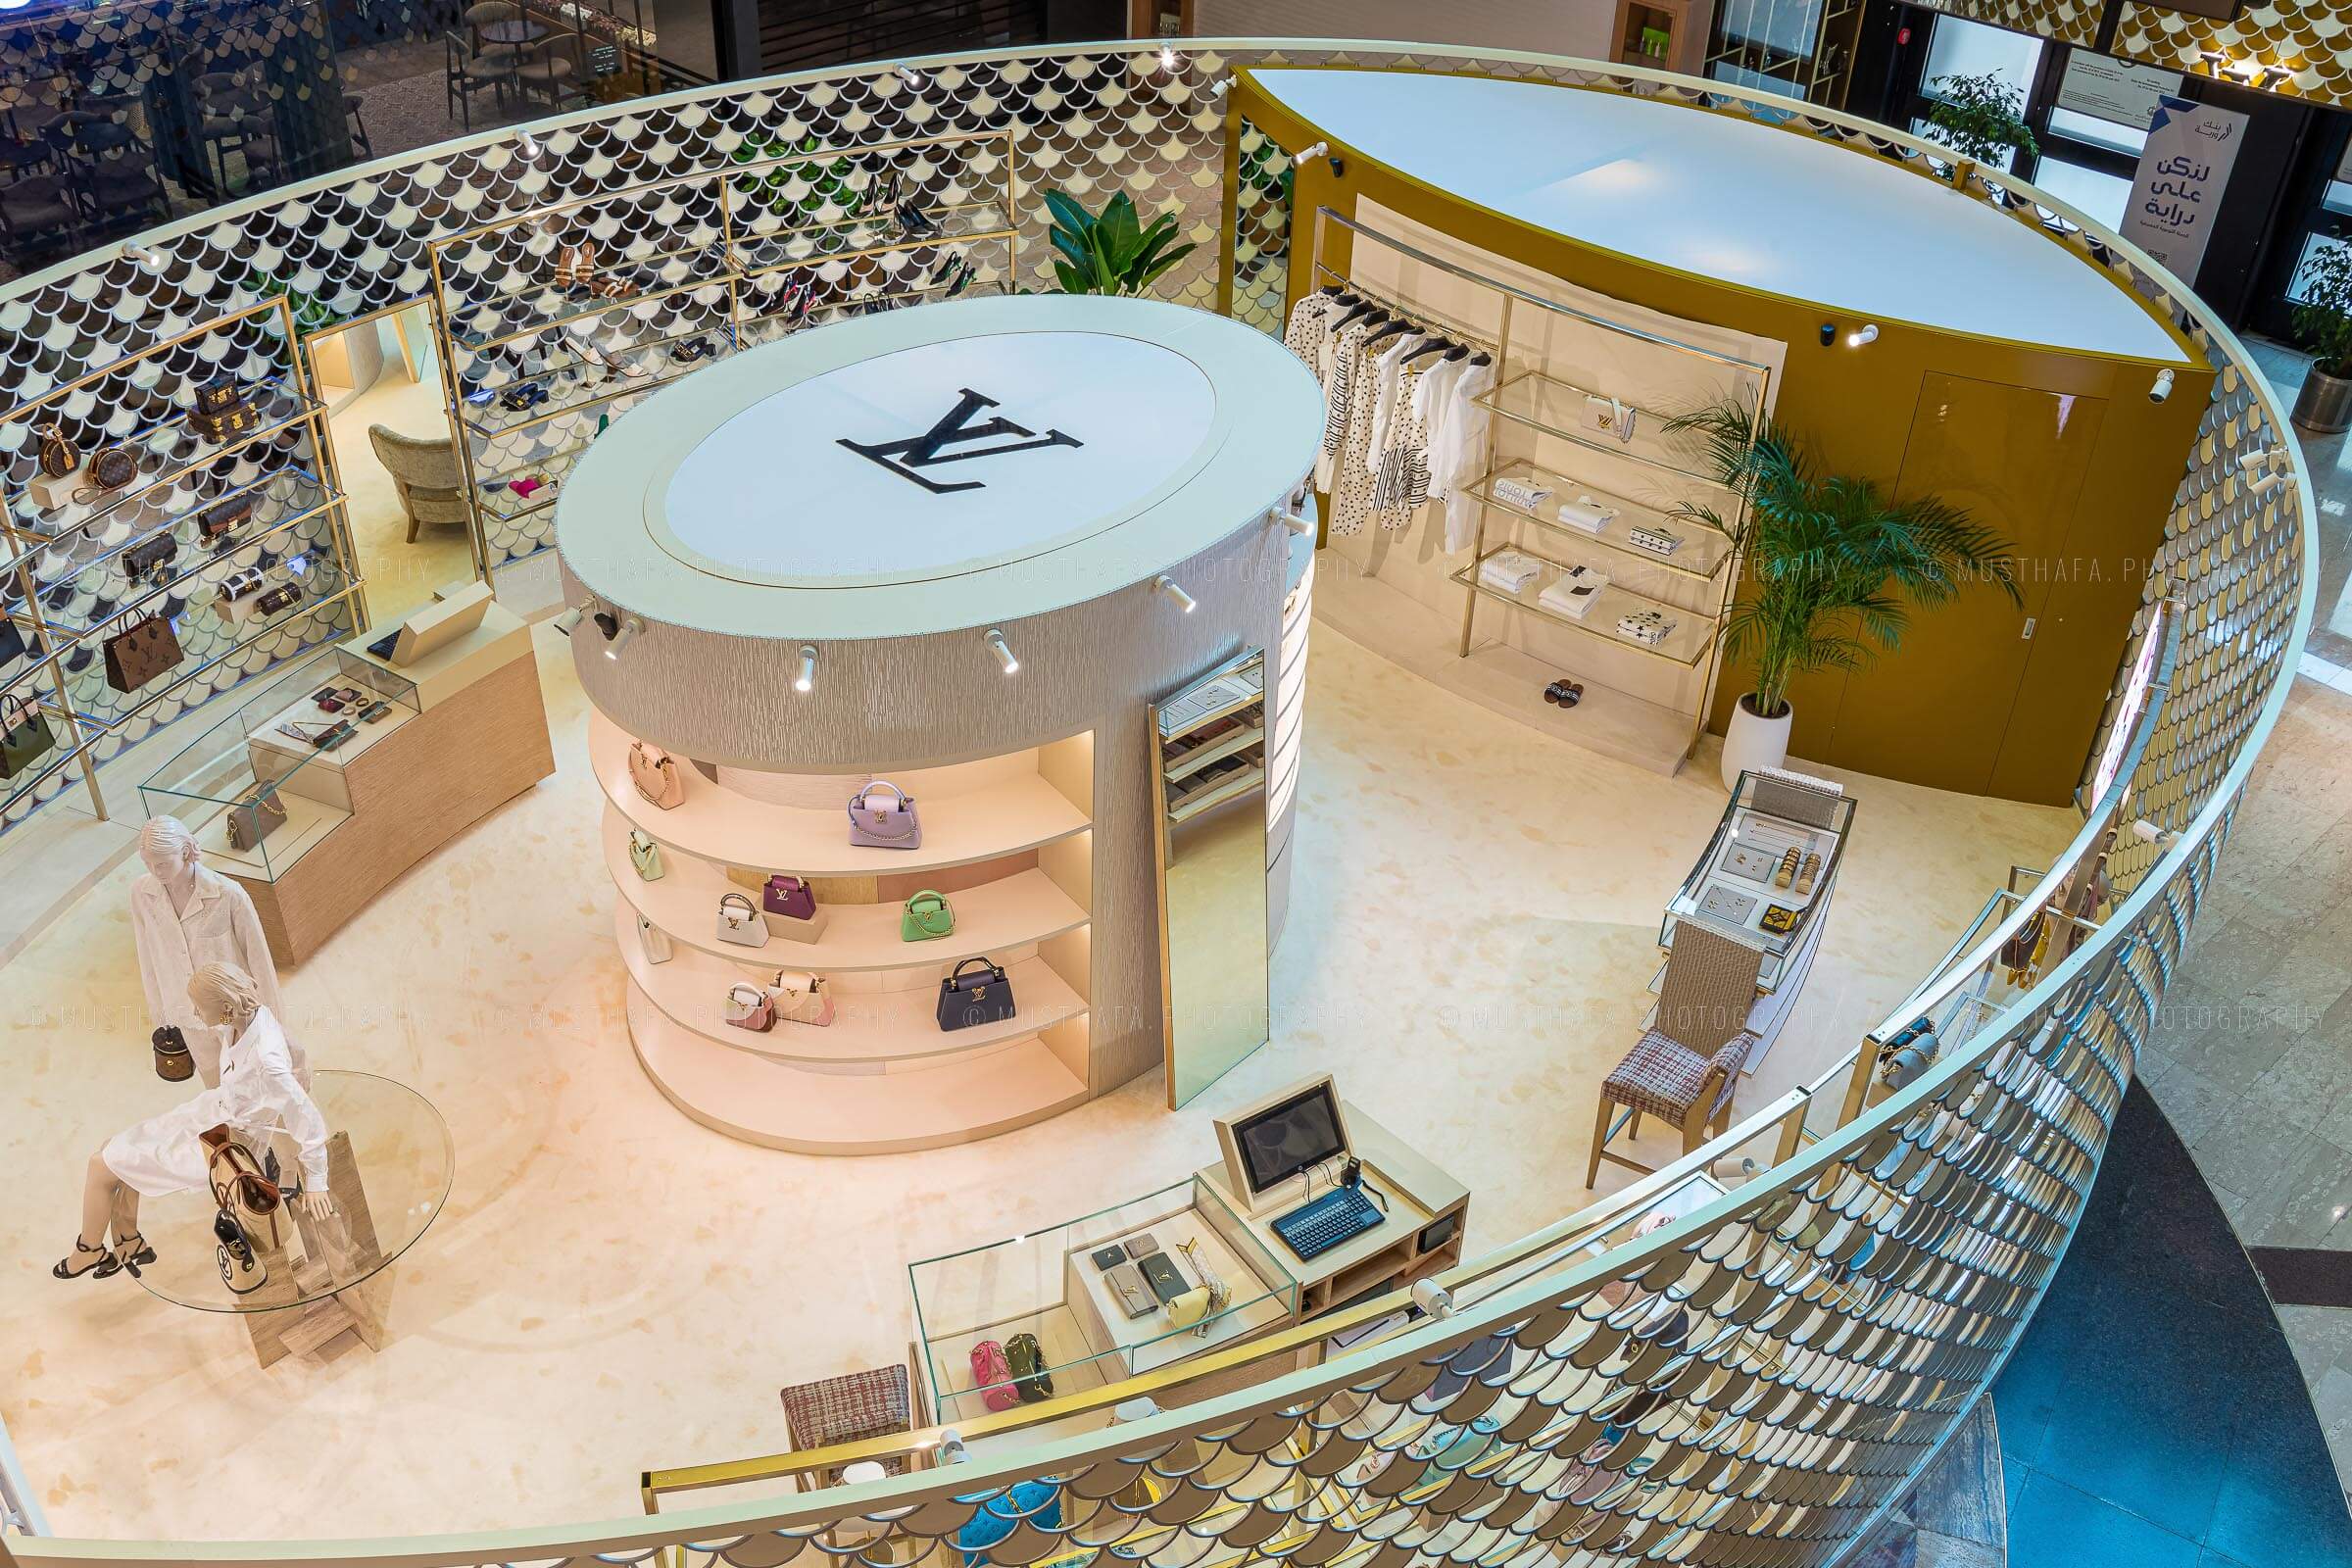 Louis Vuitton Dubai Mall Level Store in Dubai, United Arab